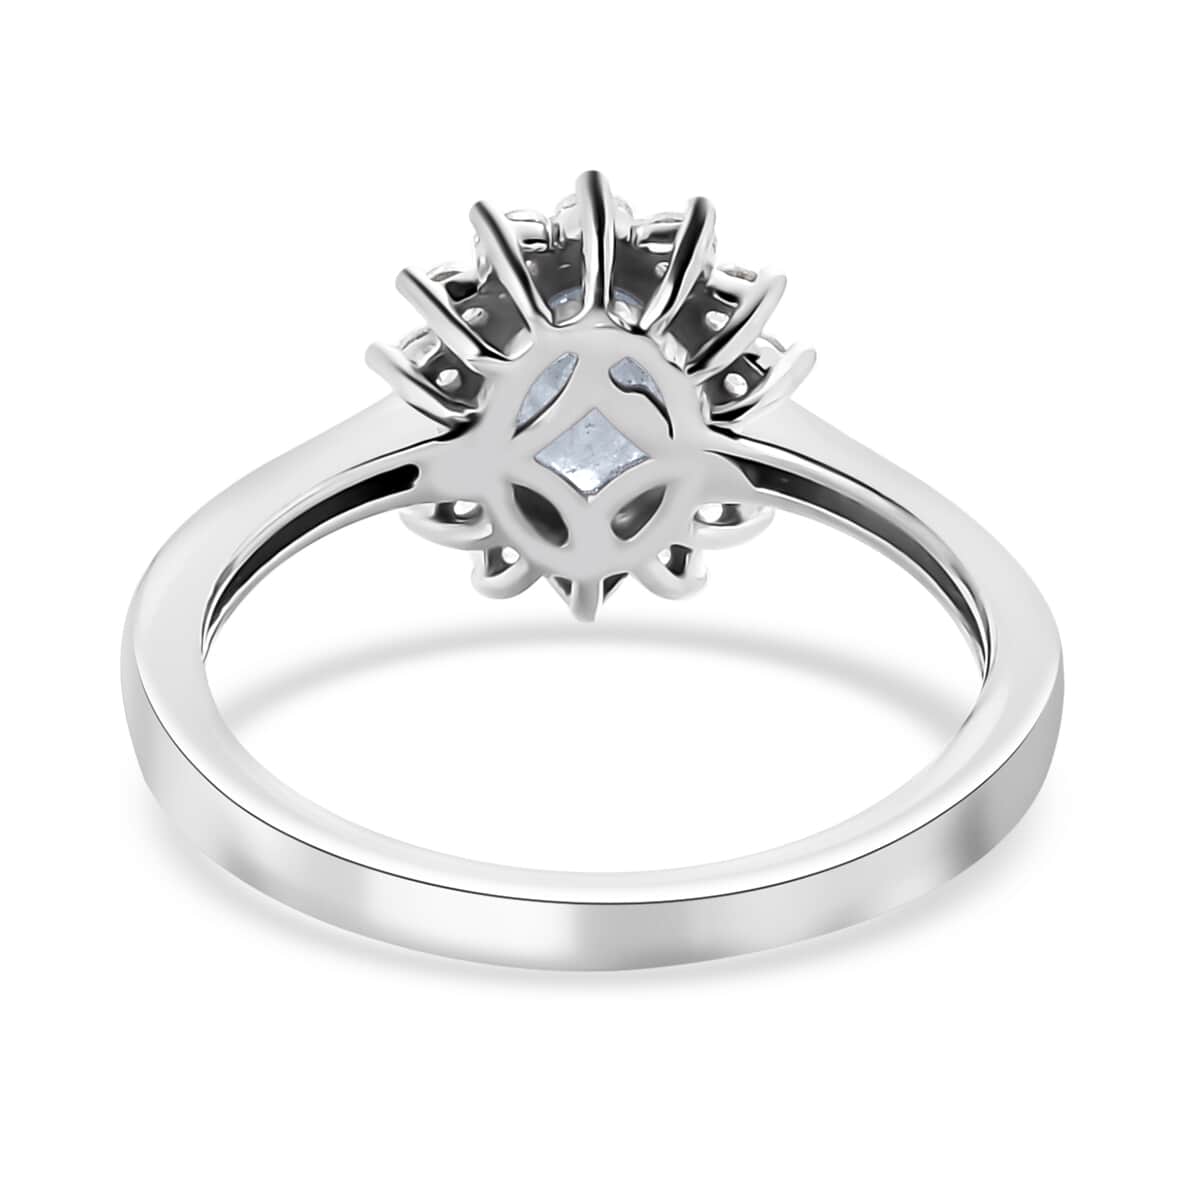 Mangoro Aquamarine and White Zircon Sunburst Ring in Platinum Over Sterling Silver (Size 8.0) 1.25 ctw image number 4